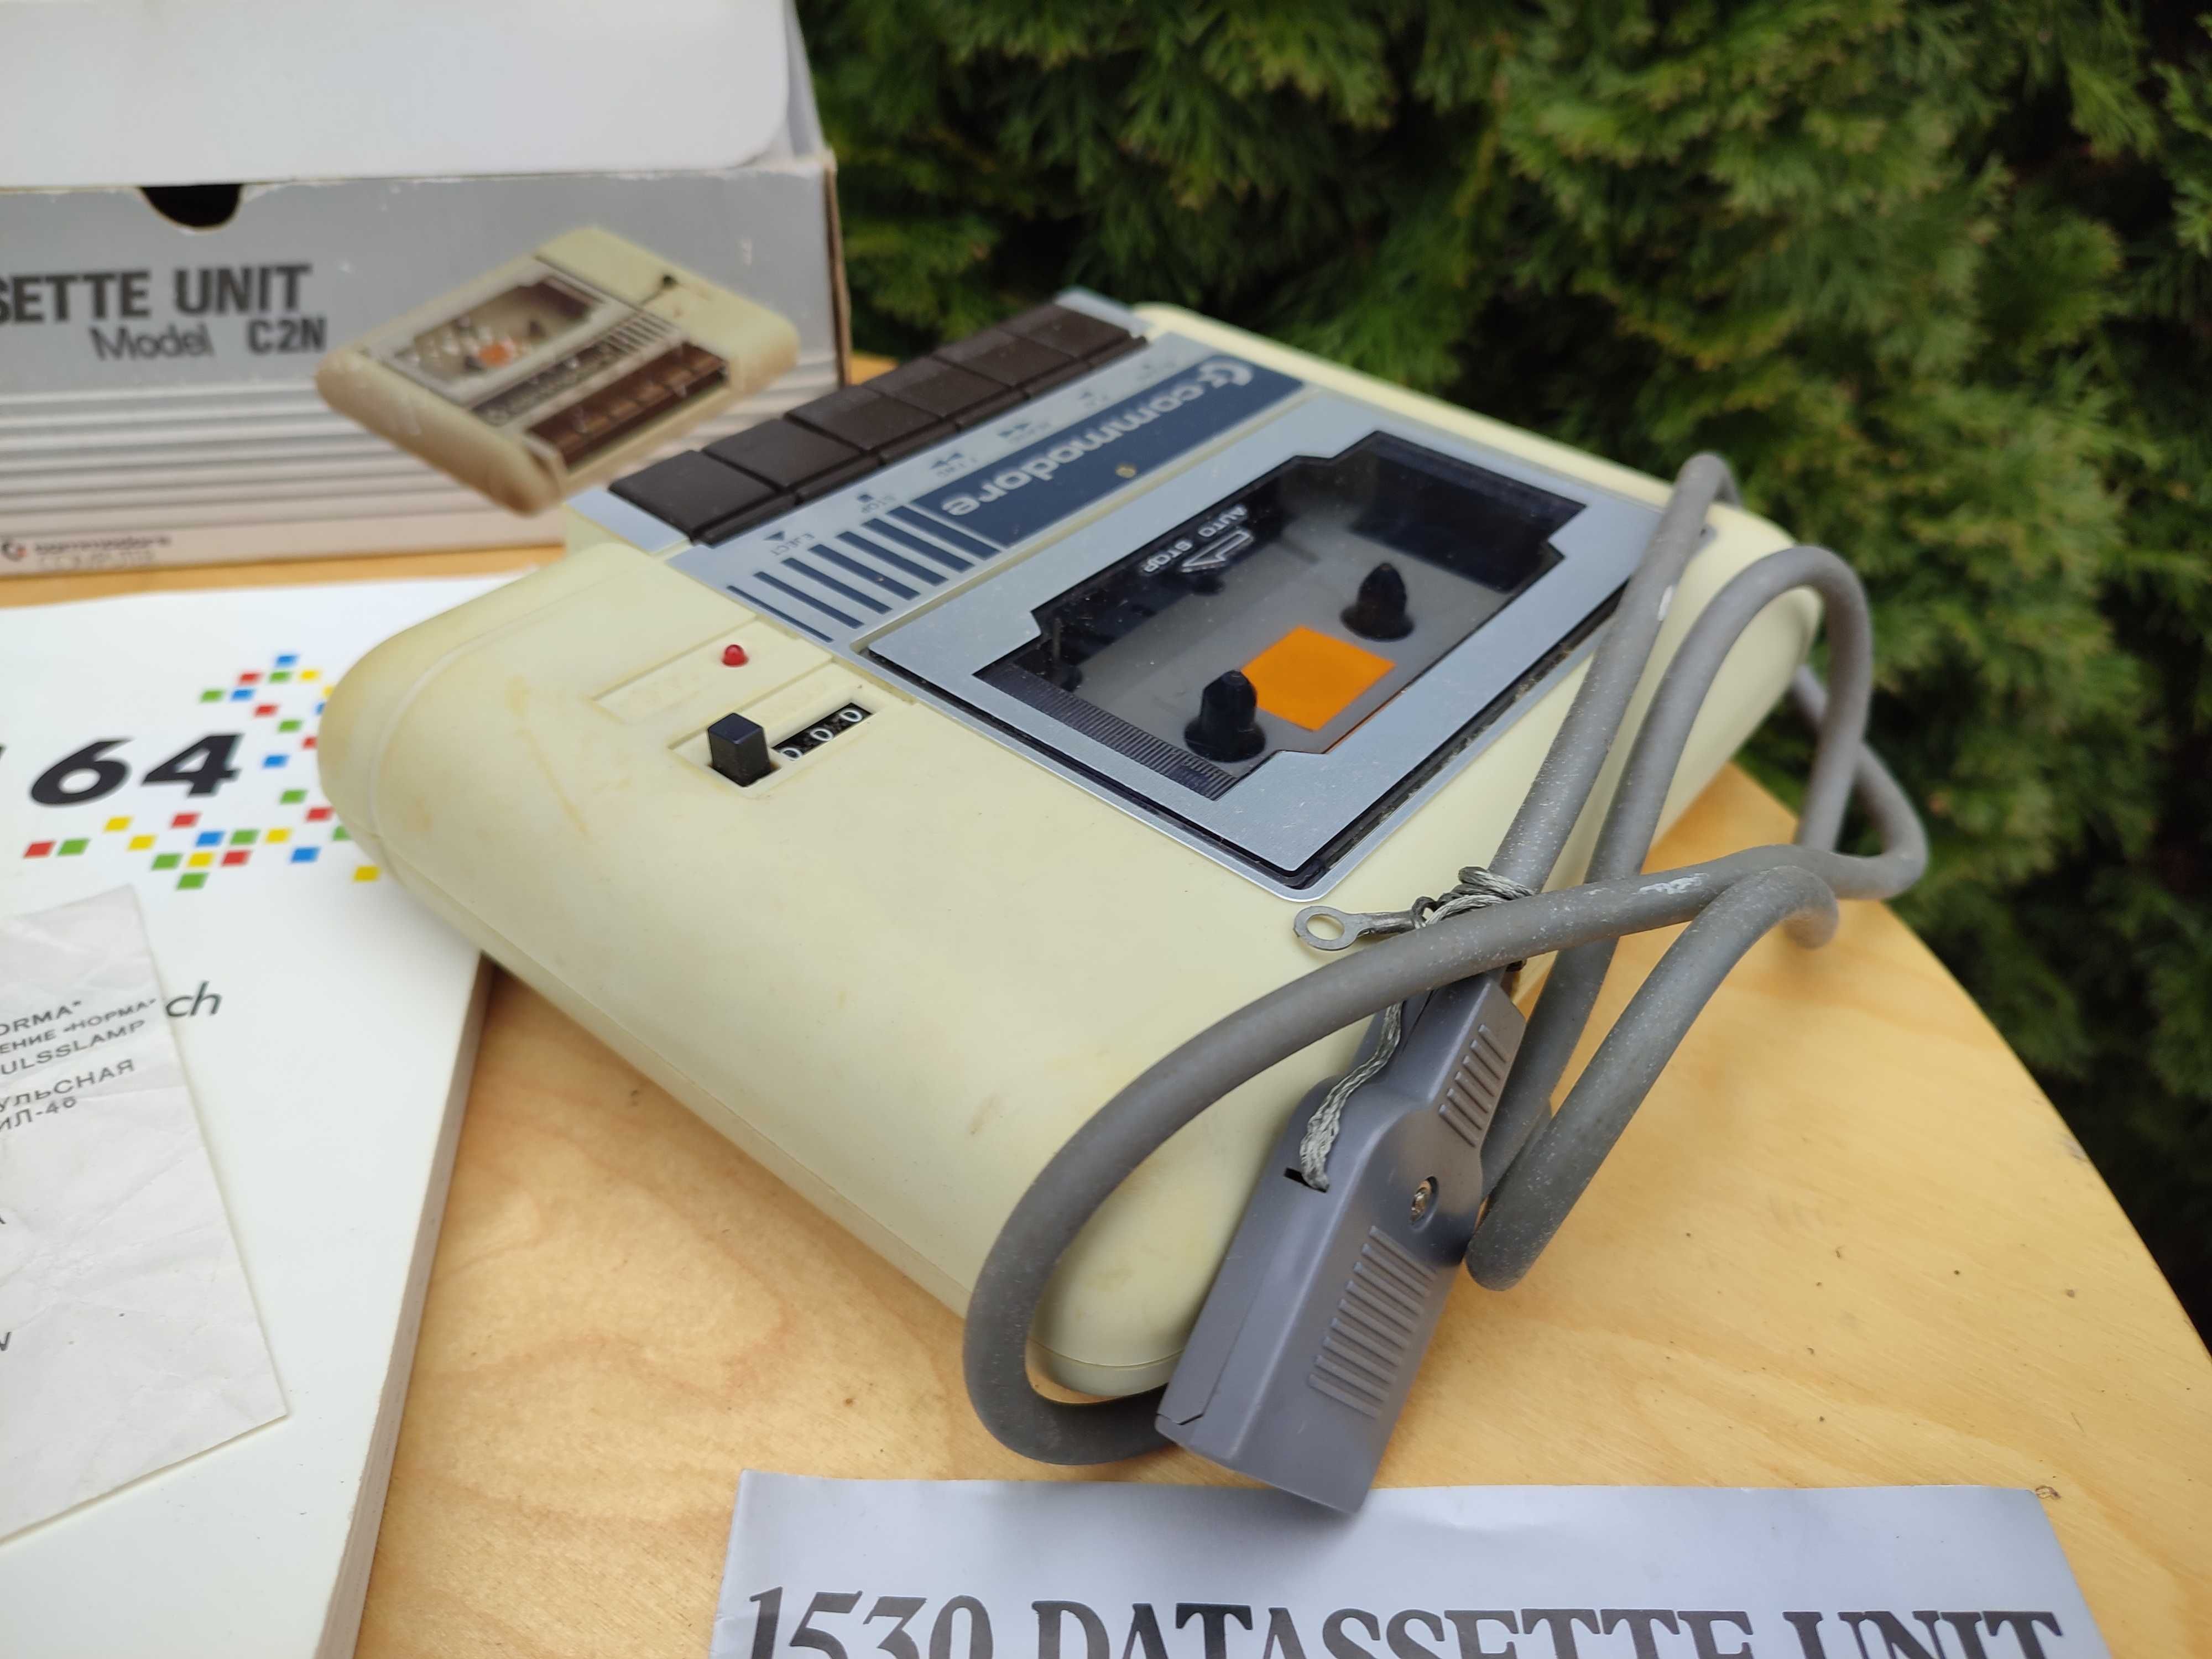 Commodore 1530 data cassette unin C2N C64 pełen komplet 92 r.